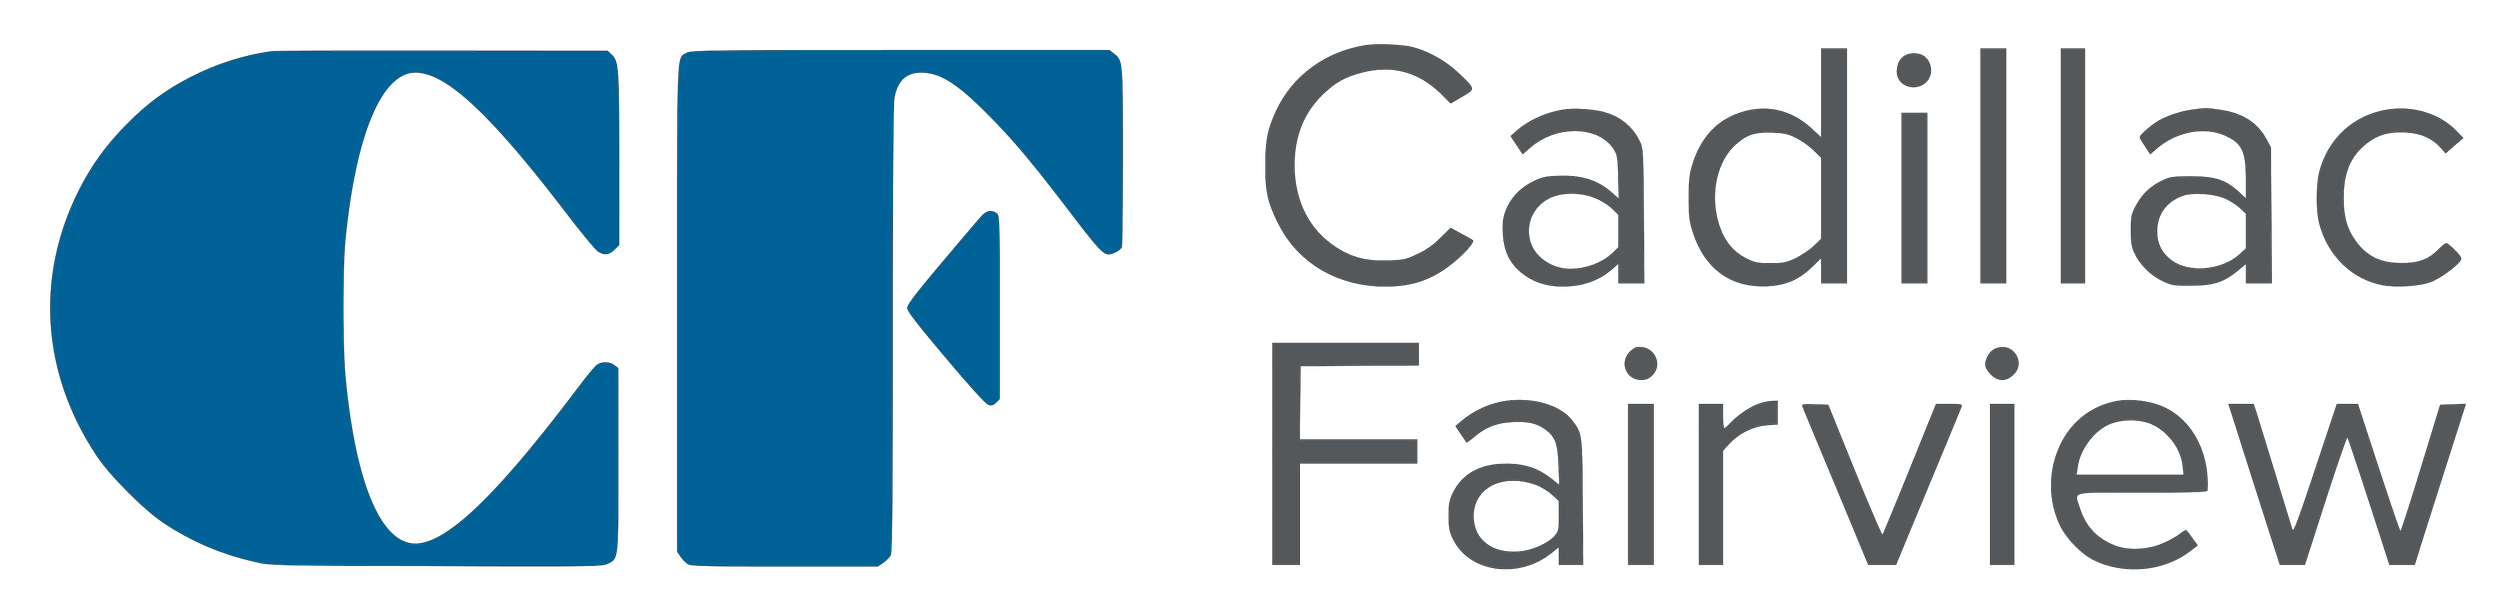 CF_Cadillac_Fairview_logo.png